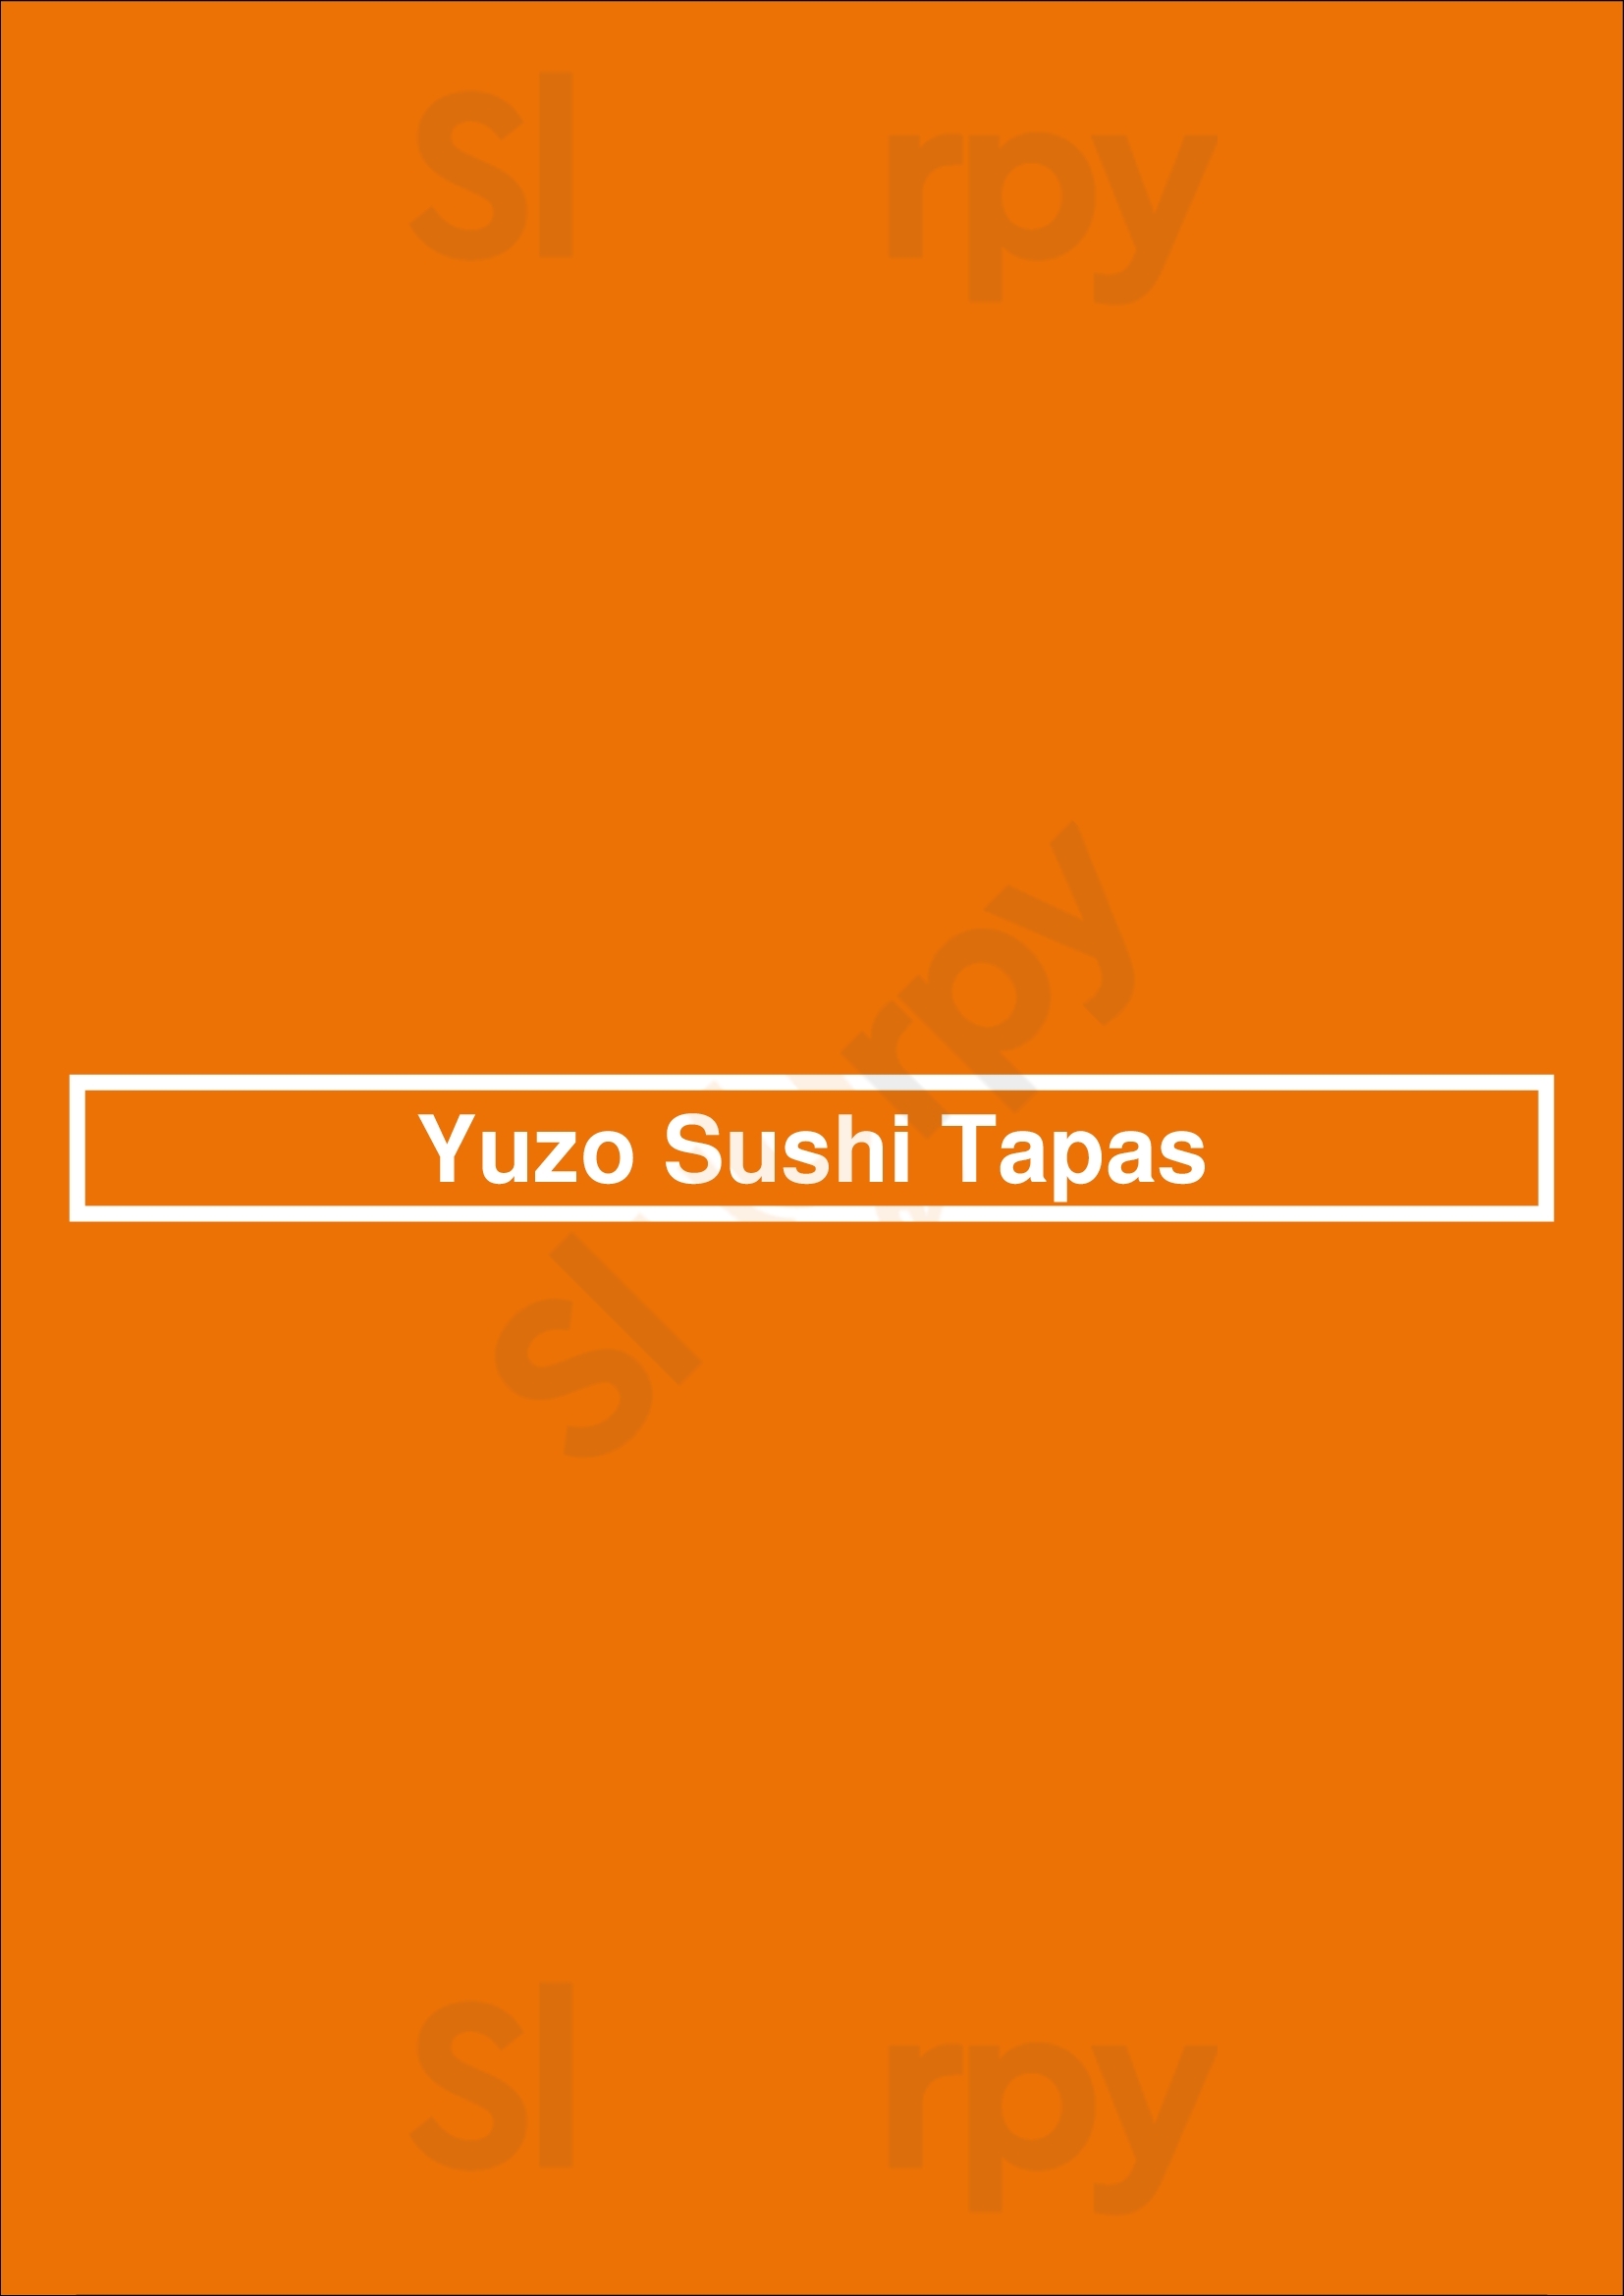 Yuzo Sushi Tapas Oklahoma City Menu - 1